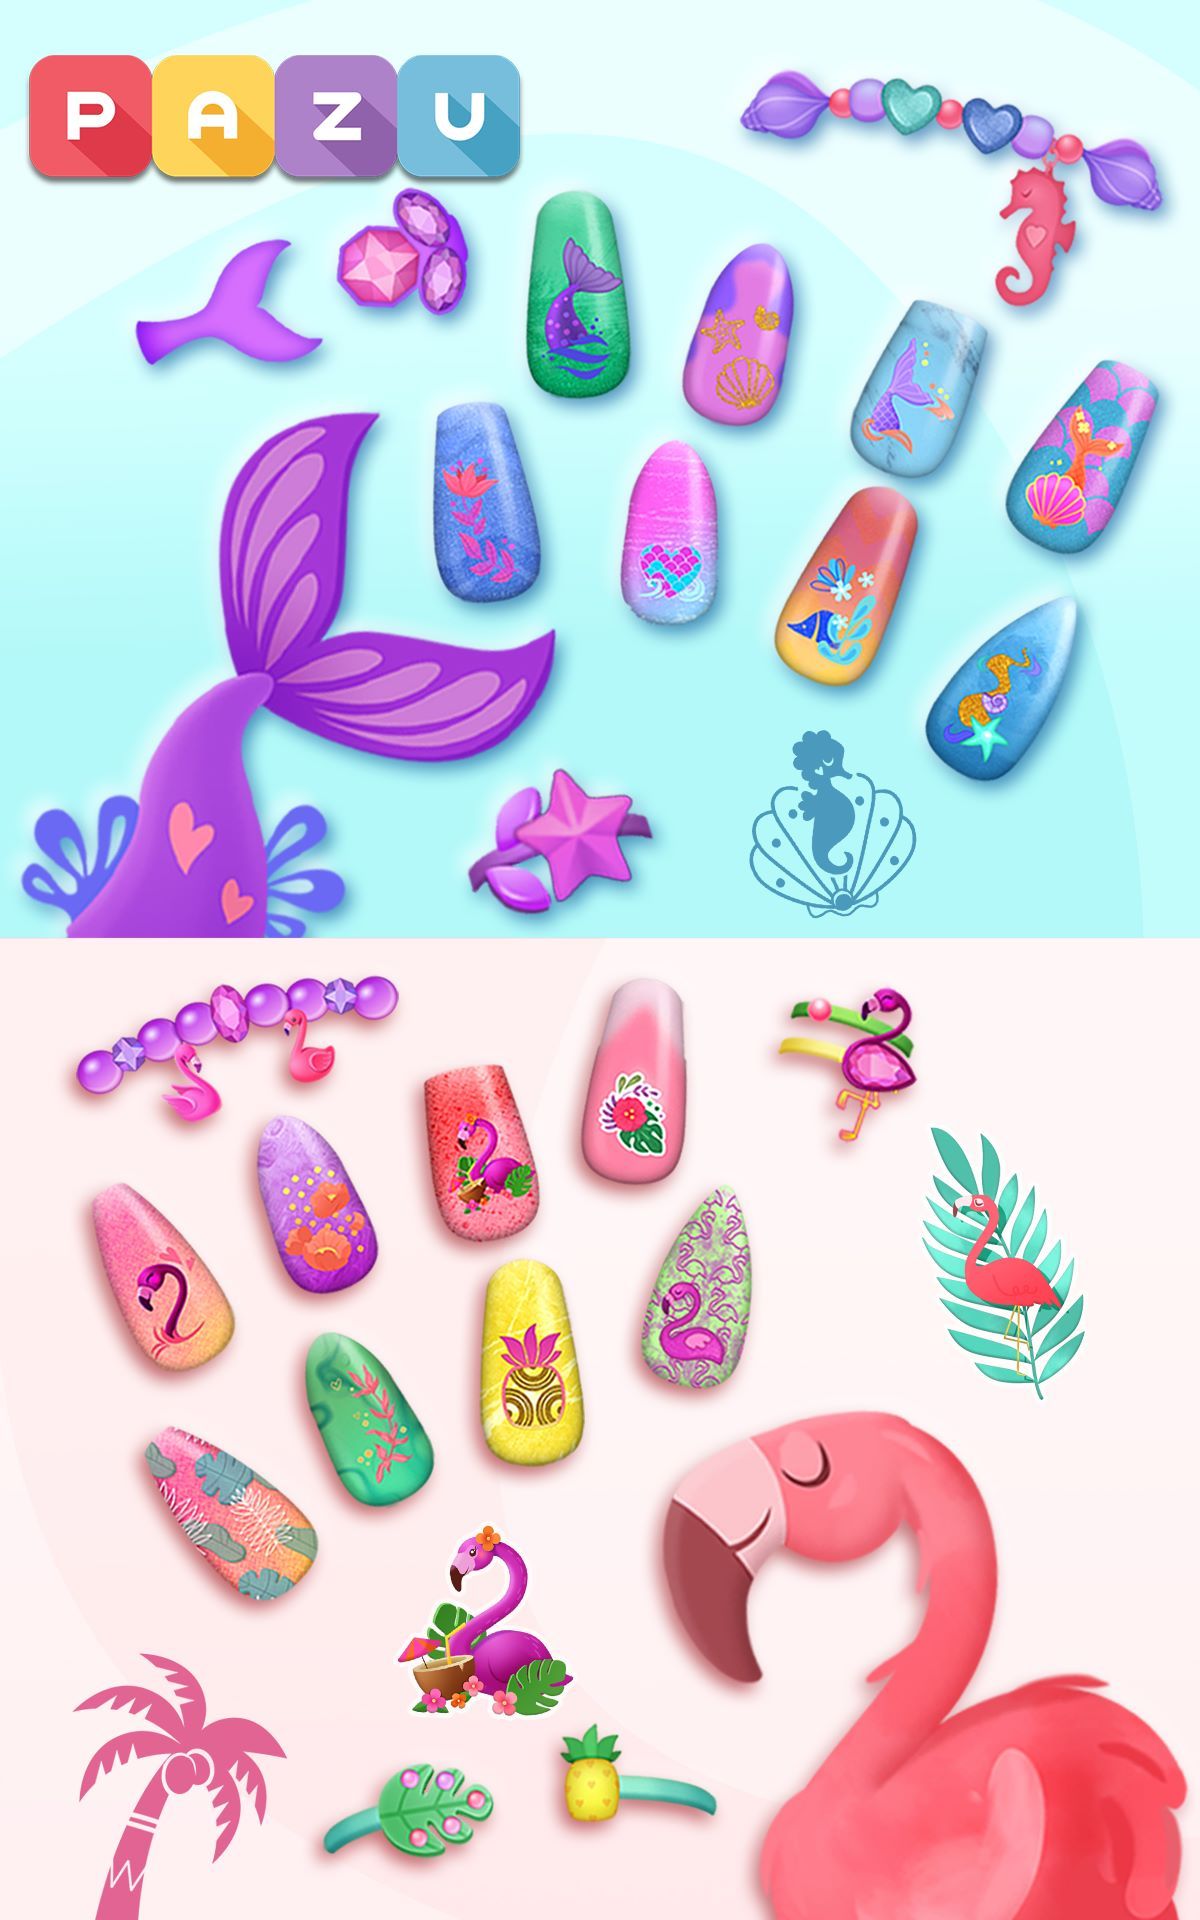 Nail Art Salon - Manicure & jewelry games for kids